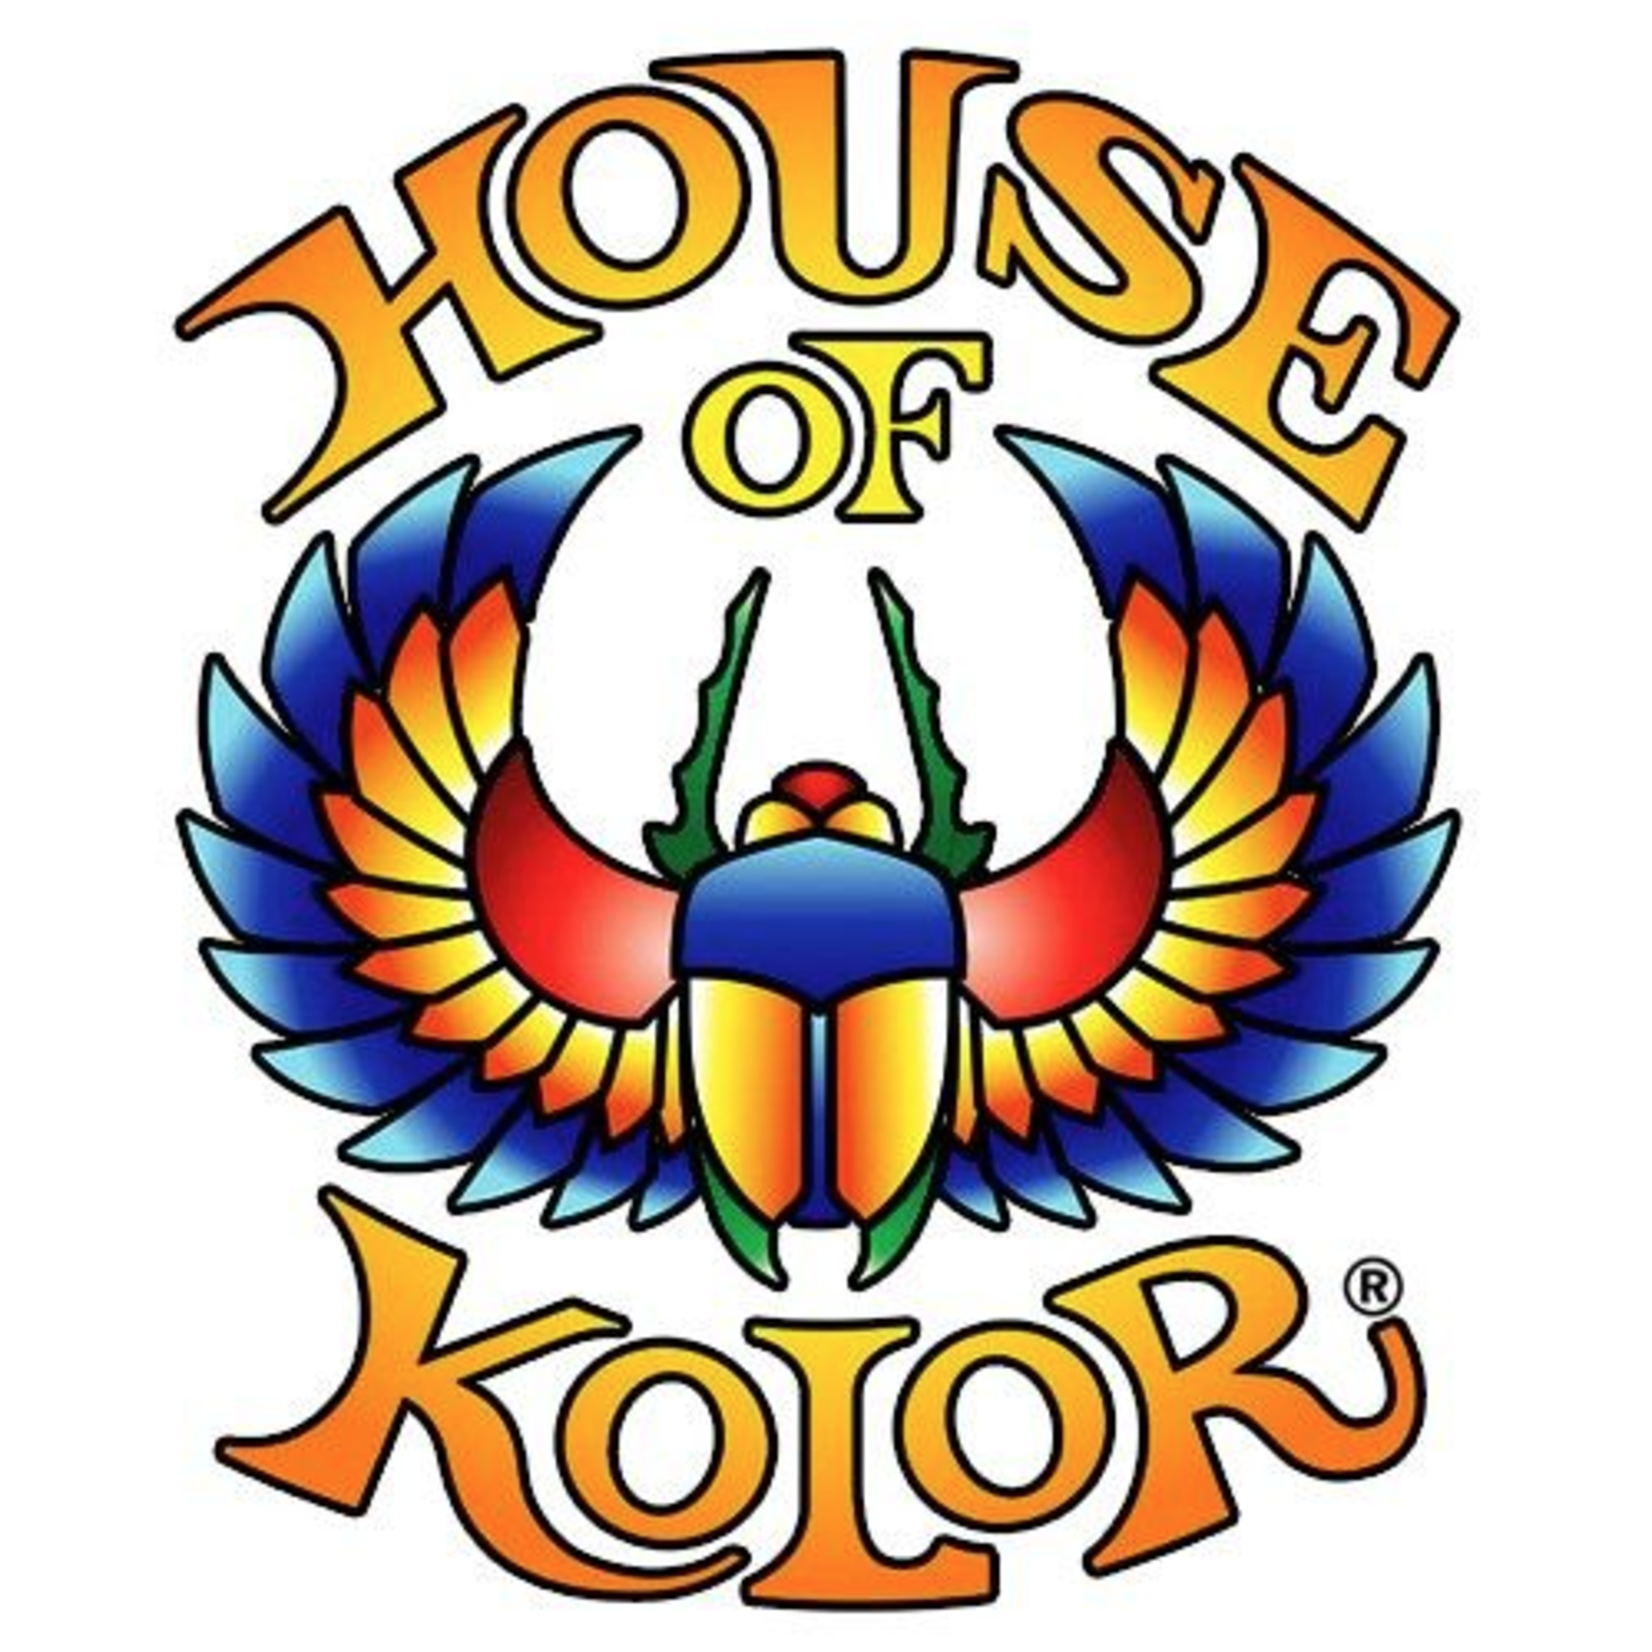 House of Kolor House of Kolor SHIMRIN2 Orion Silvermax